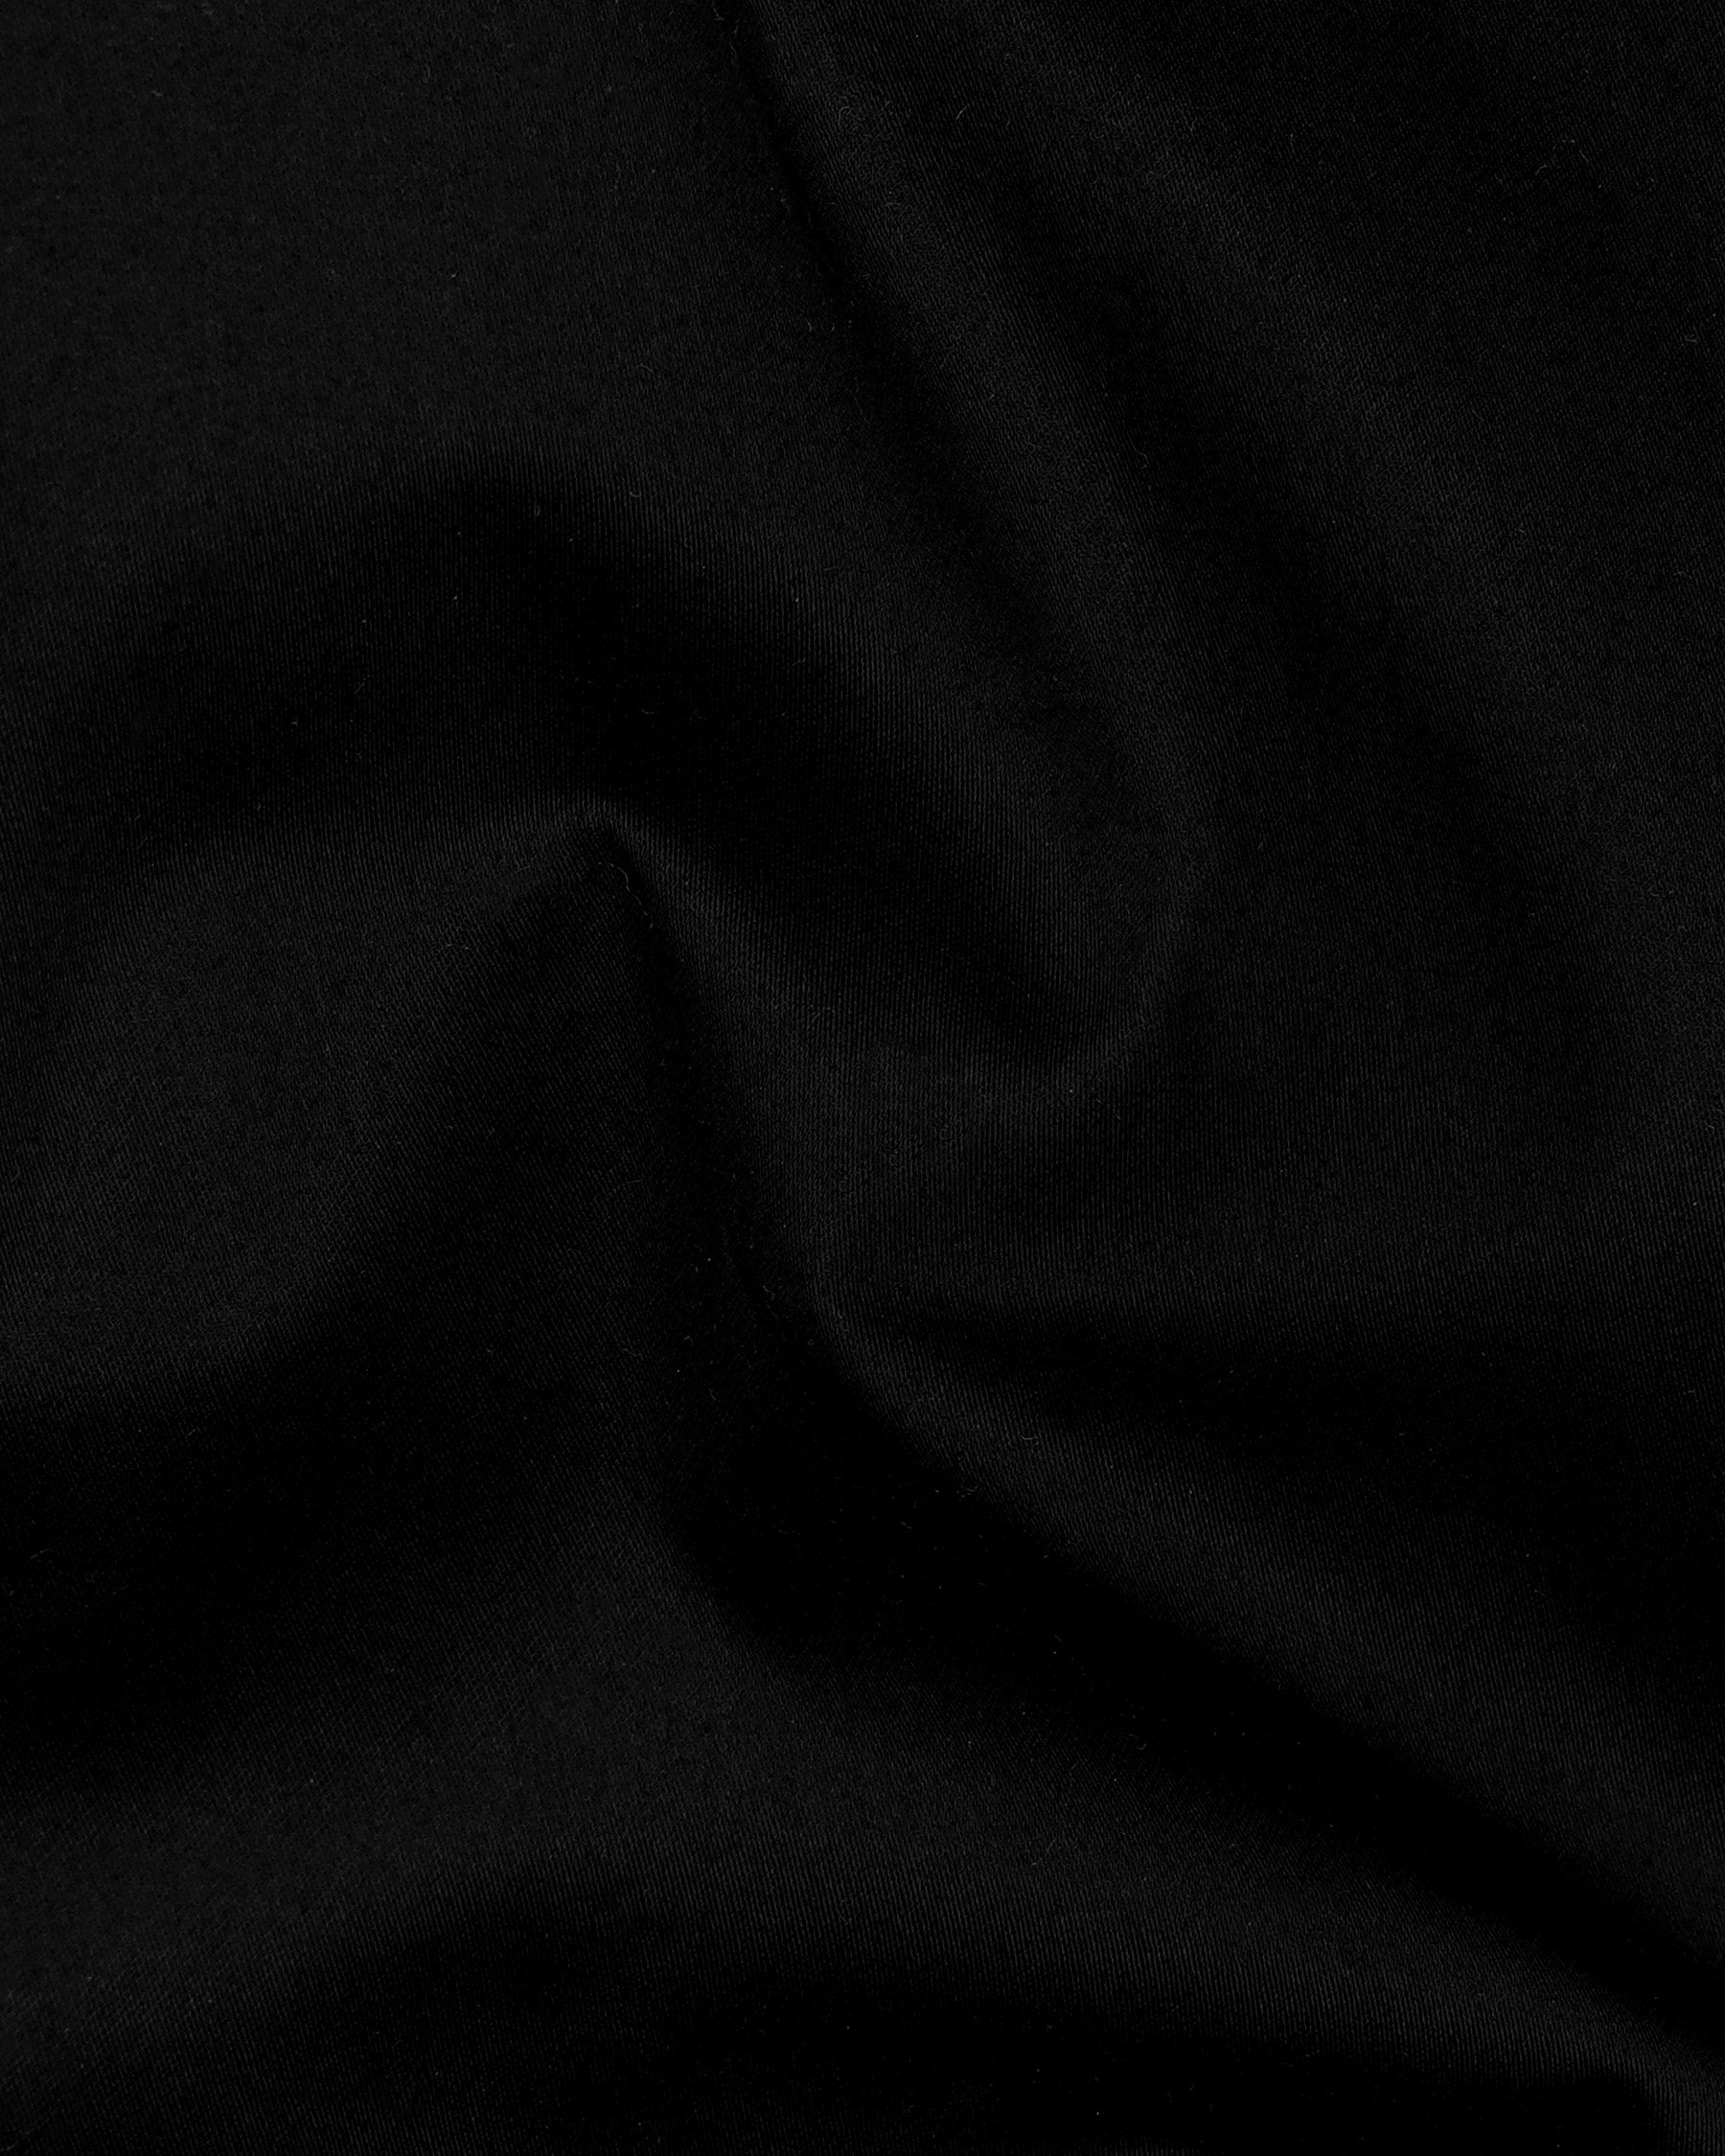 Jade Black colorful buttons Super Soft Premium Cotton Shirt 7790-MCB-38, 7790-MCB-H-38, 7790-MCB-39, 7790-MCB-H-39, 7790-MCB-40, 7790-MCB-H-40, 7790-MCB-42, 7790-MCB-H-42, 7790-MCB-44, 7790-MCB-H-44, 7790-MCB-46, 7790-MCB-H-46, 7790-MCB-48, 7790-MCB-H-48, 7790-MCB-50, 7790-MCB-H-50, 7790-MCB-52, 7790-MCB-H-52